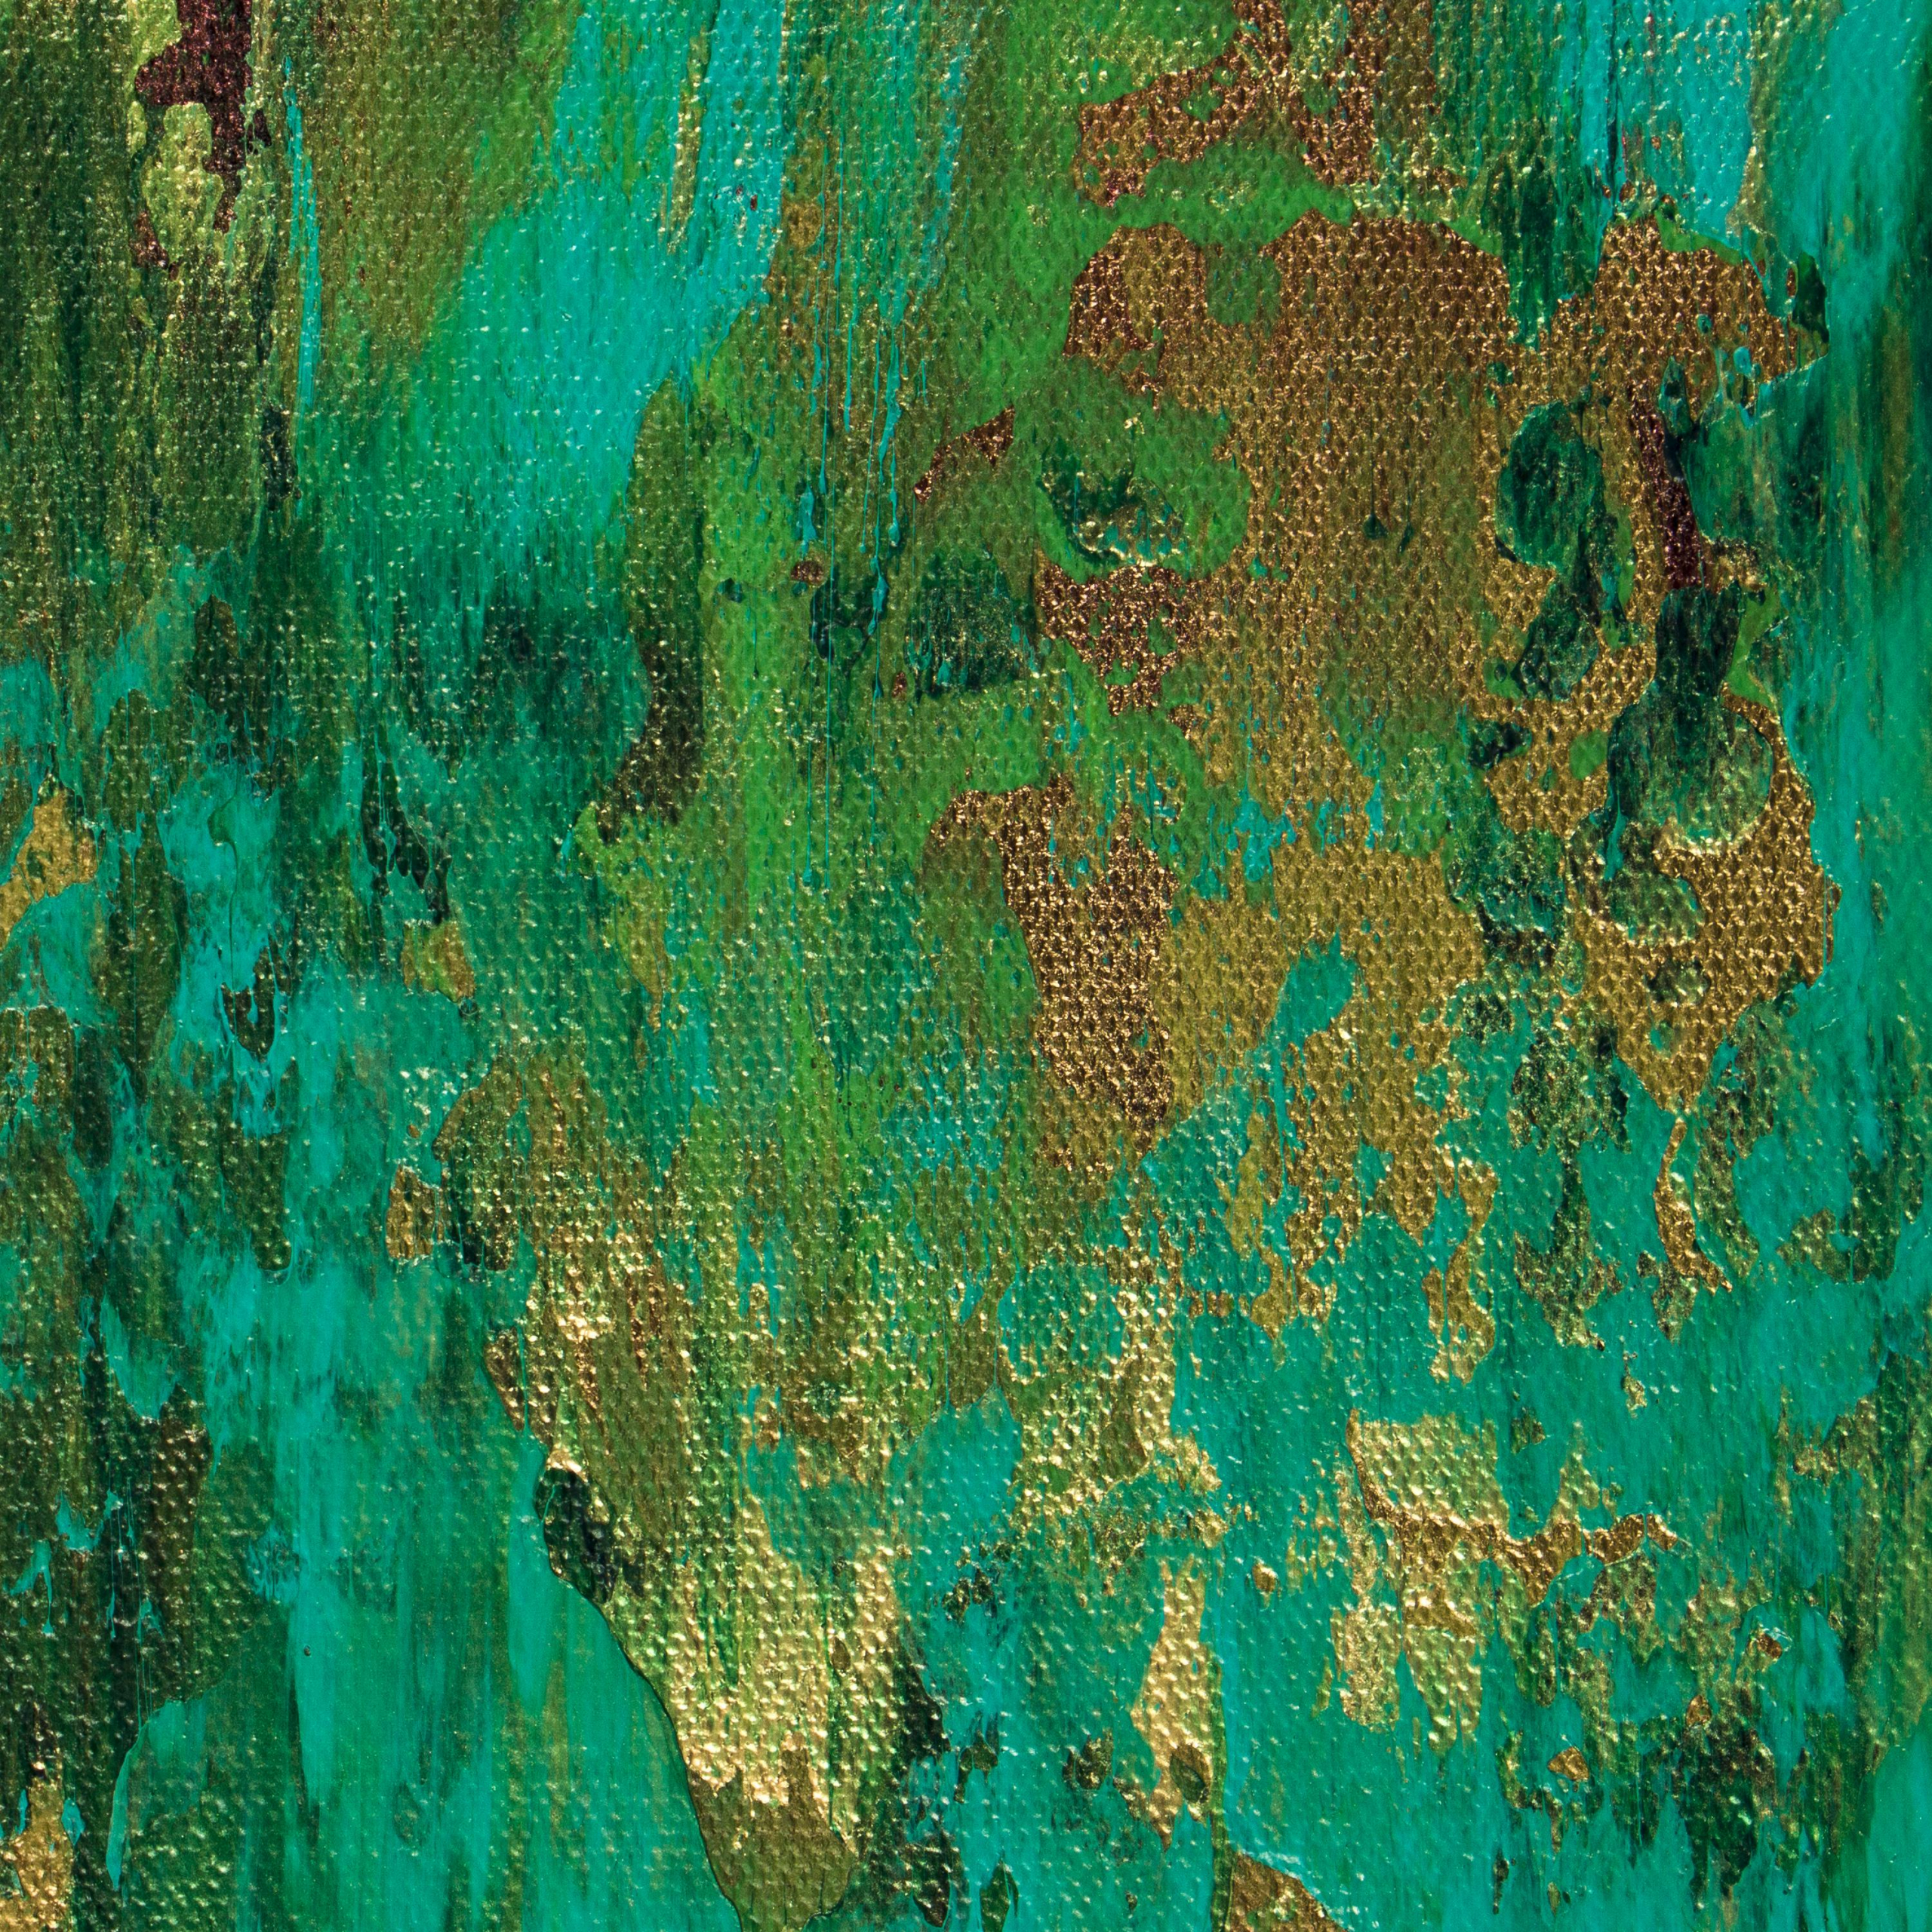 Detail / Emerald Panorama (Gold Intrusions) (2021) / Artist - Nestor Toro